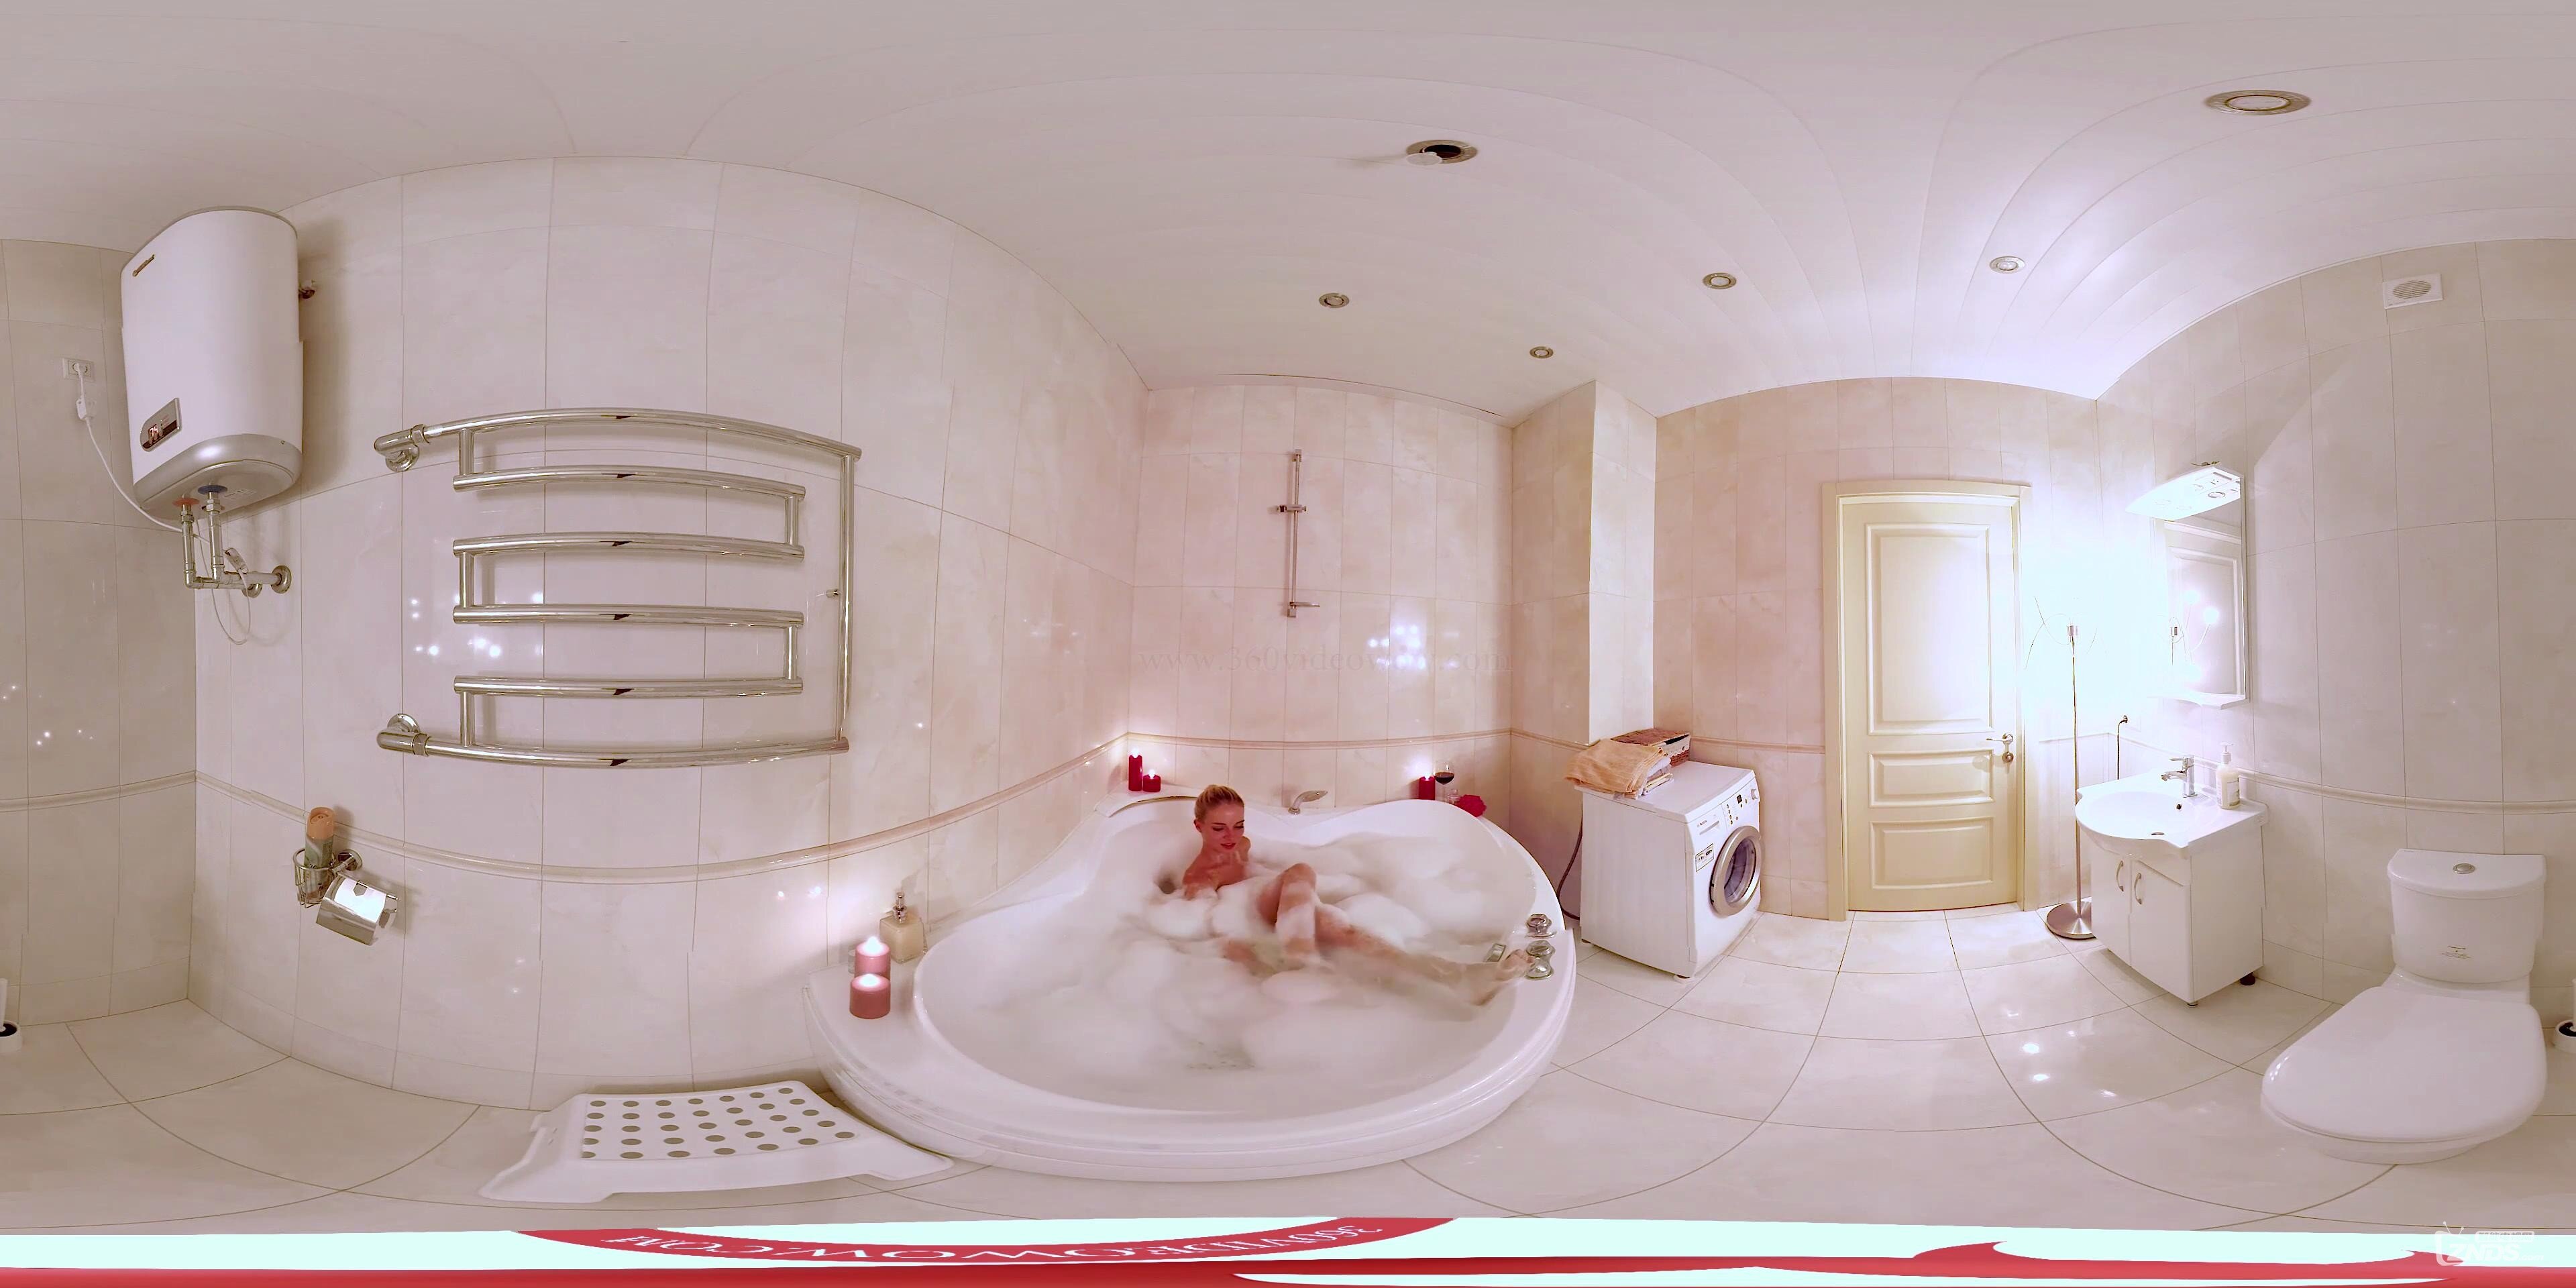 Sexy Girl 360 Video - Taking the Perfect Bath - VR Oculus Rift virtual reality g.jpg